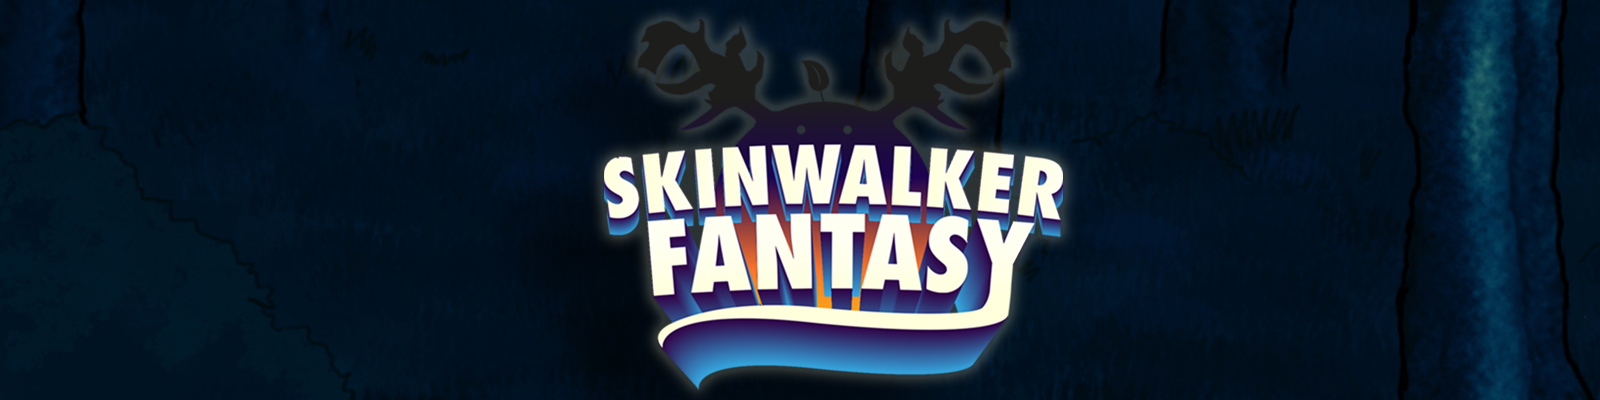 A Skinwalker Fantasy poster